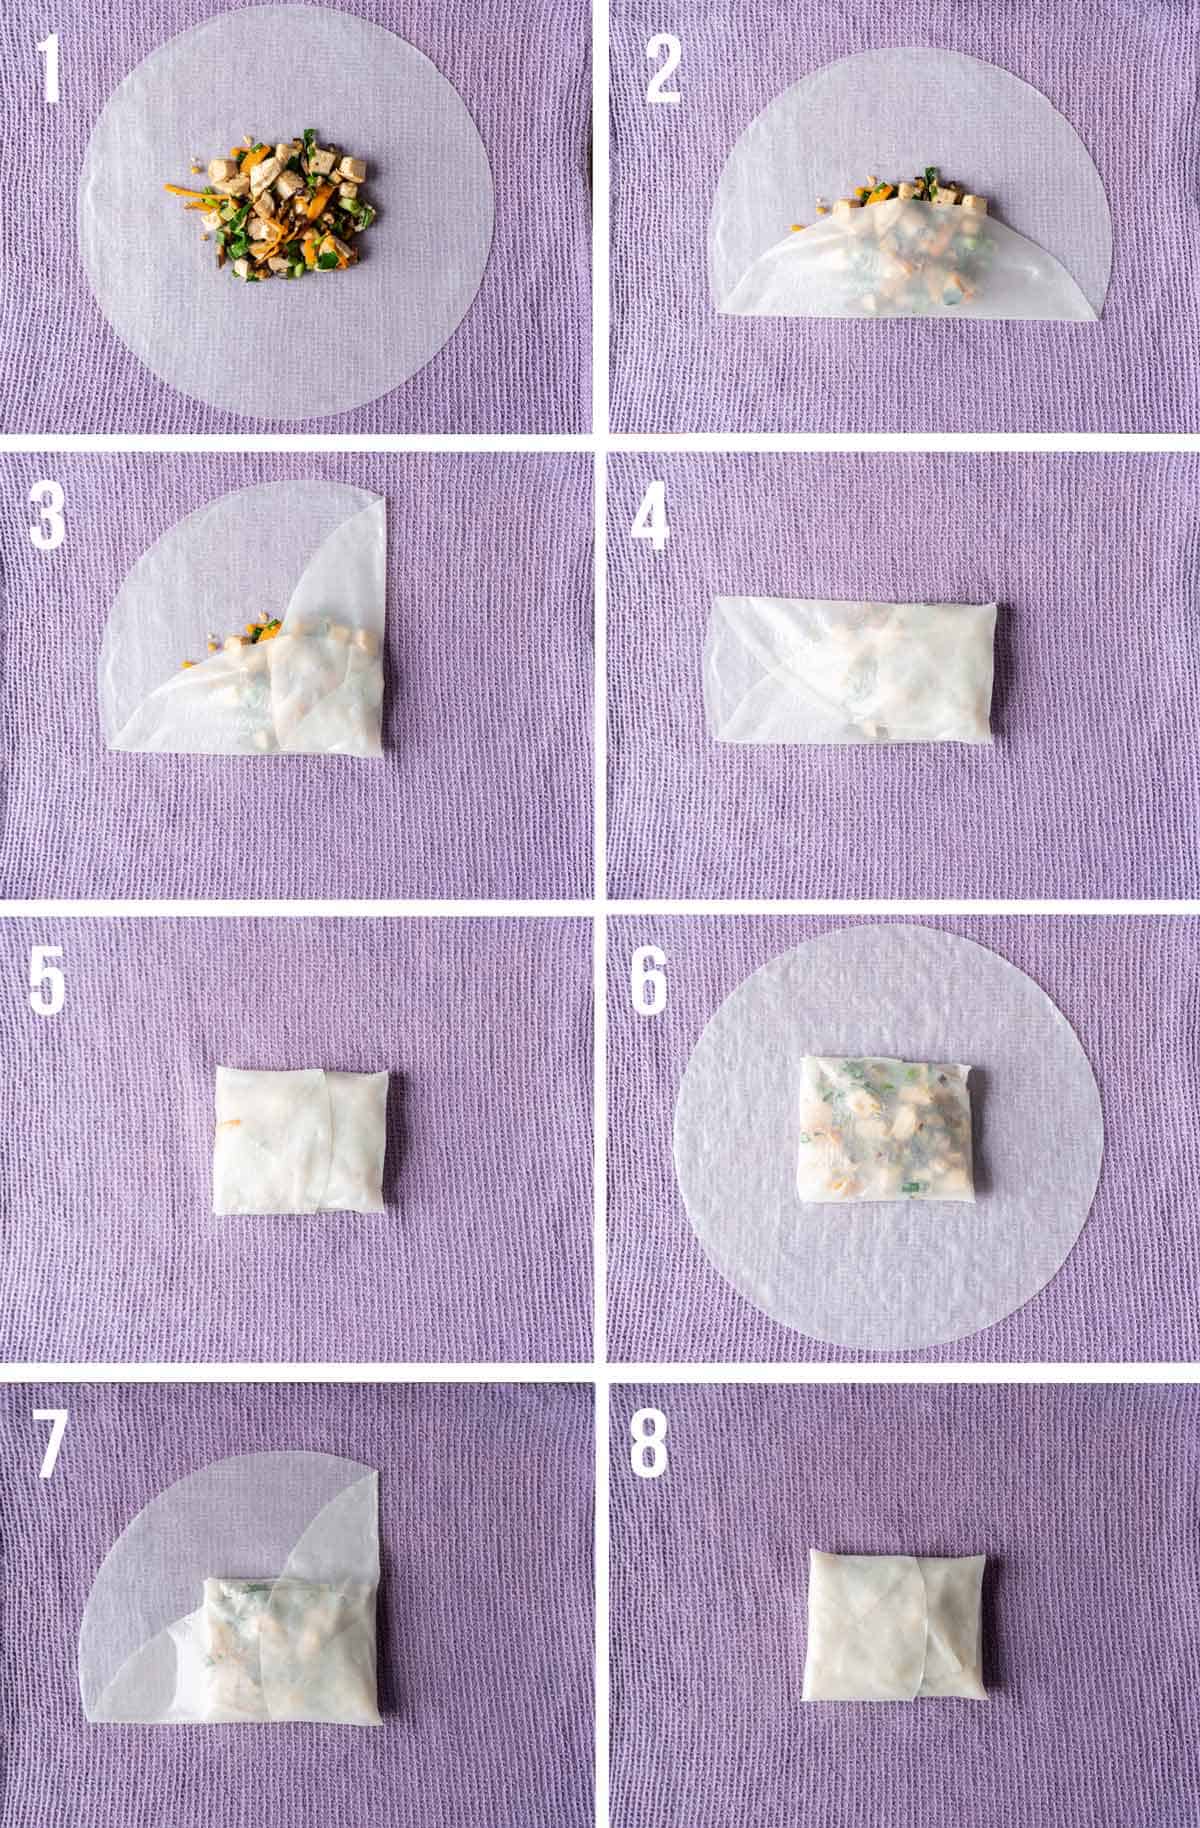 How to fold rice paper dumplings.